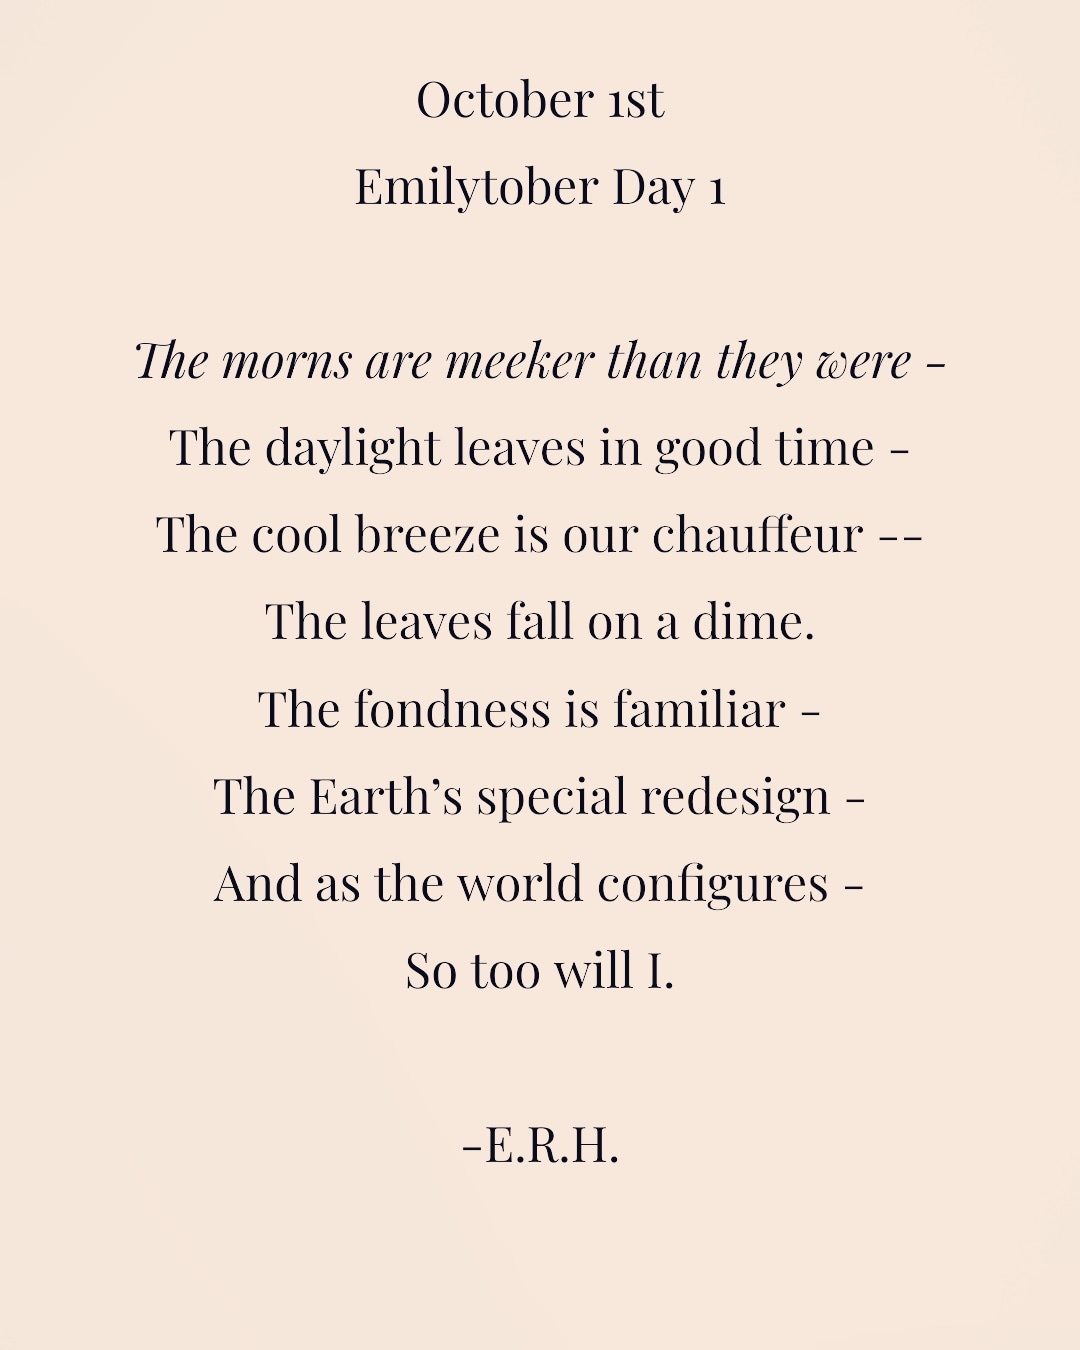 Emily dickinson poems